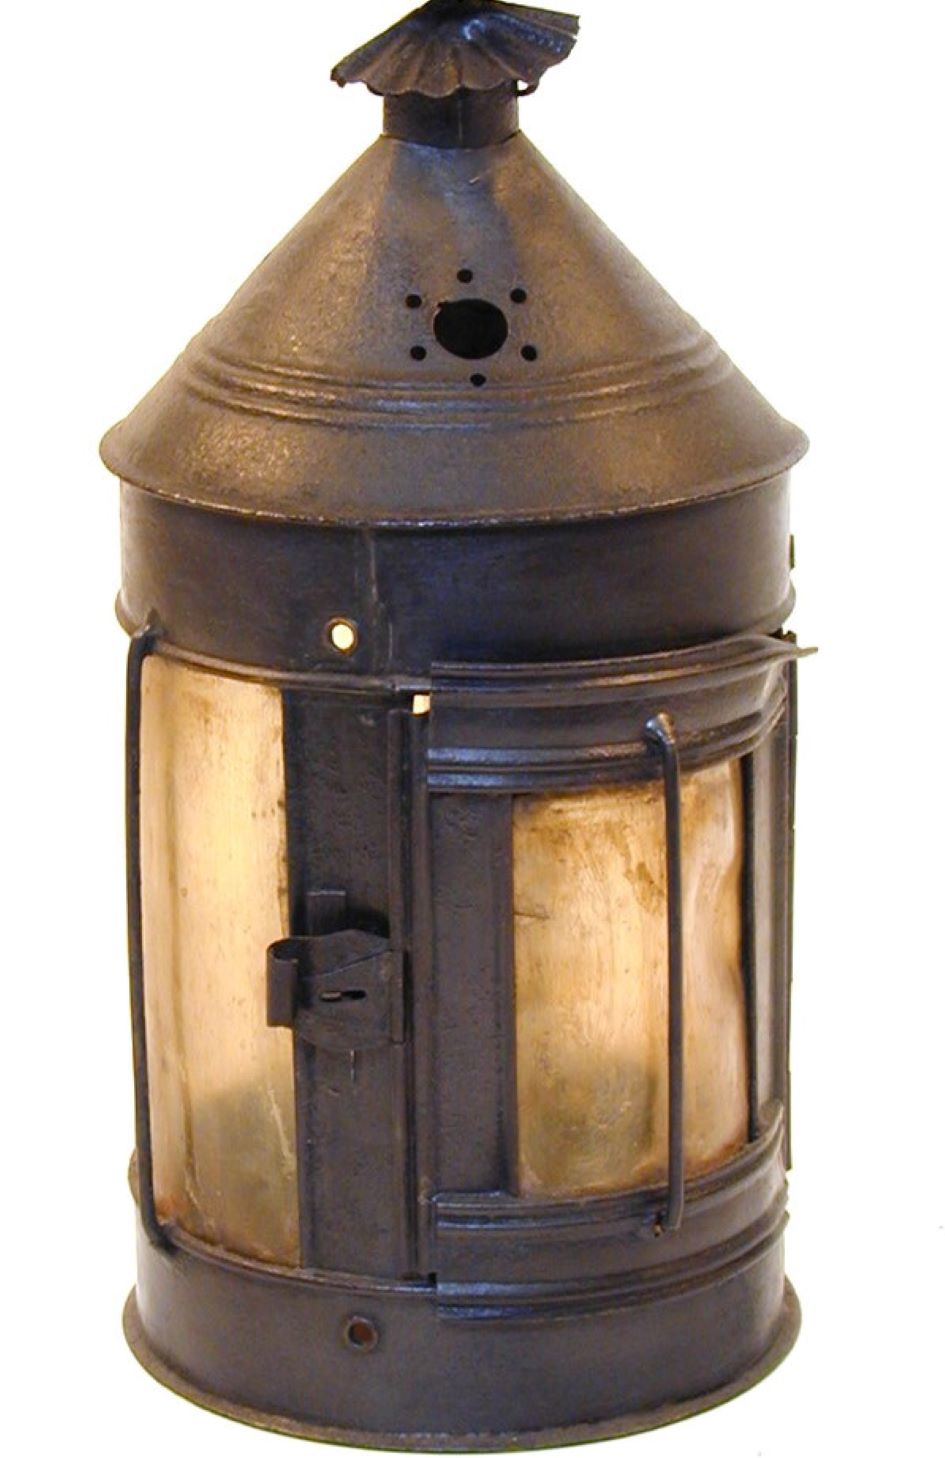 Horn lantern